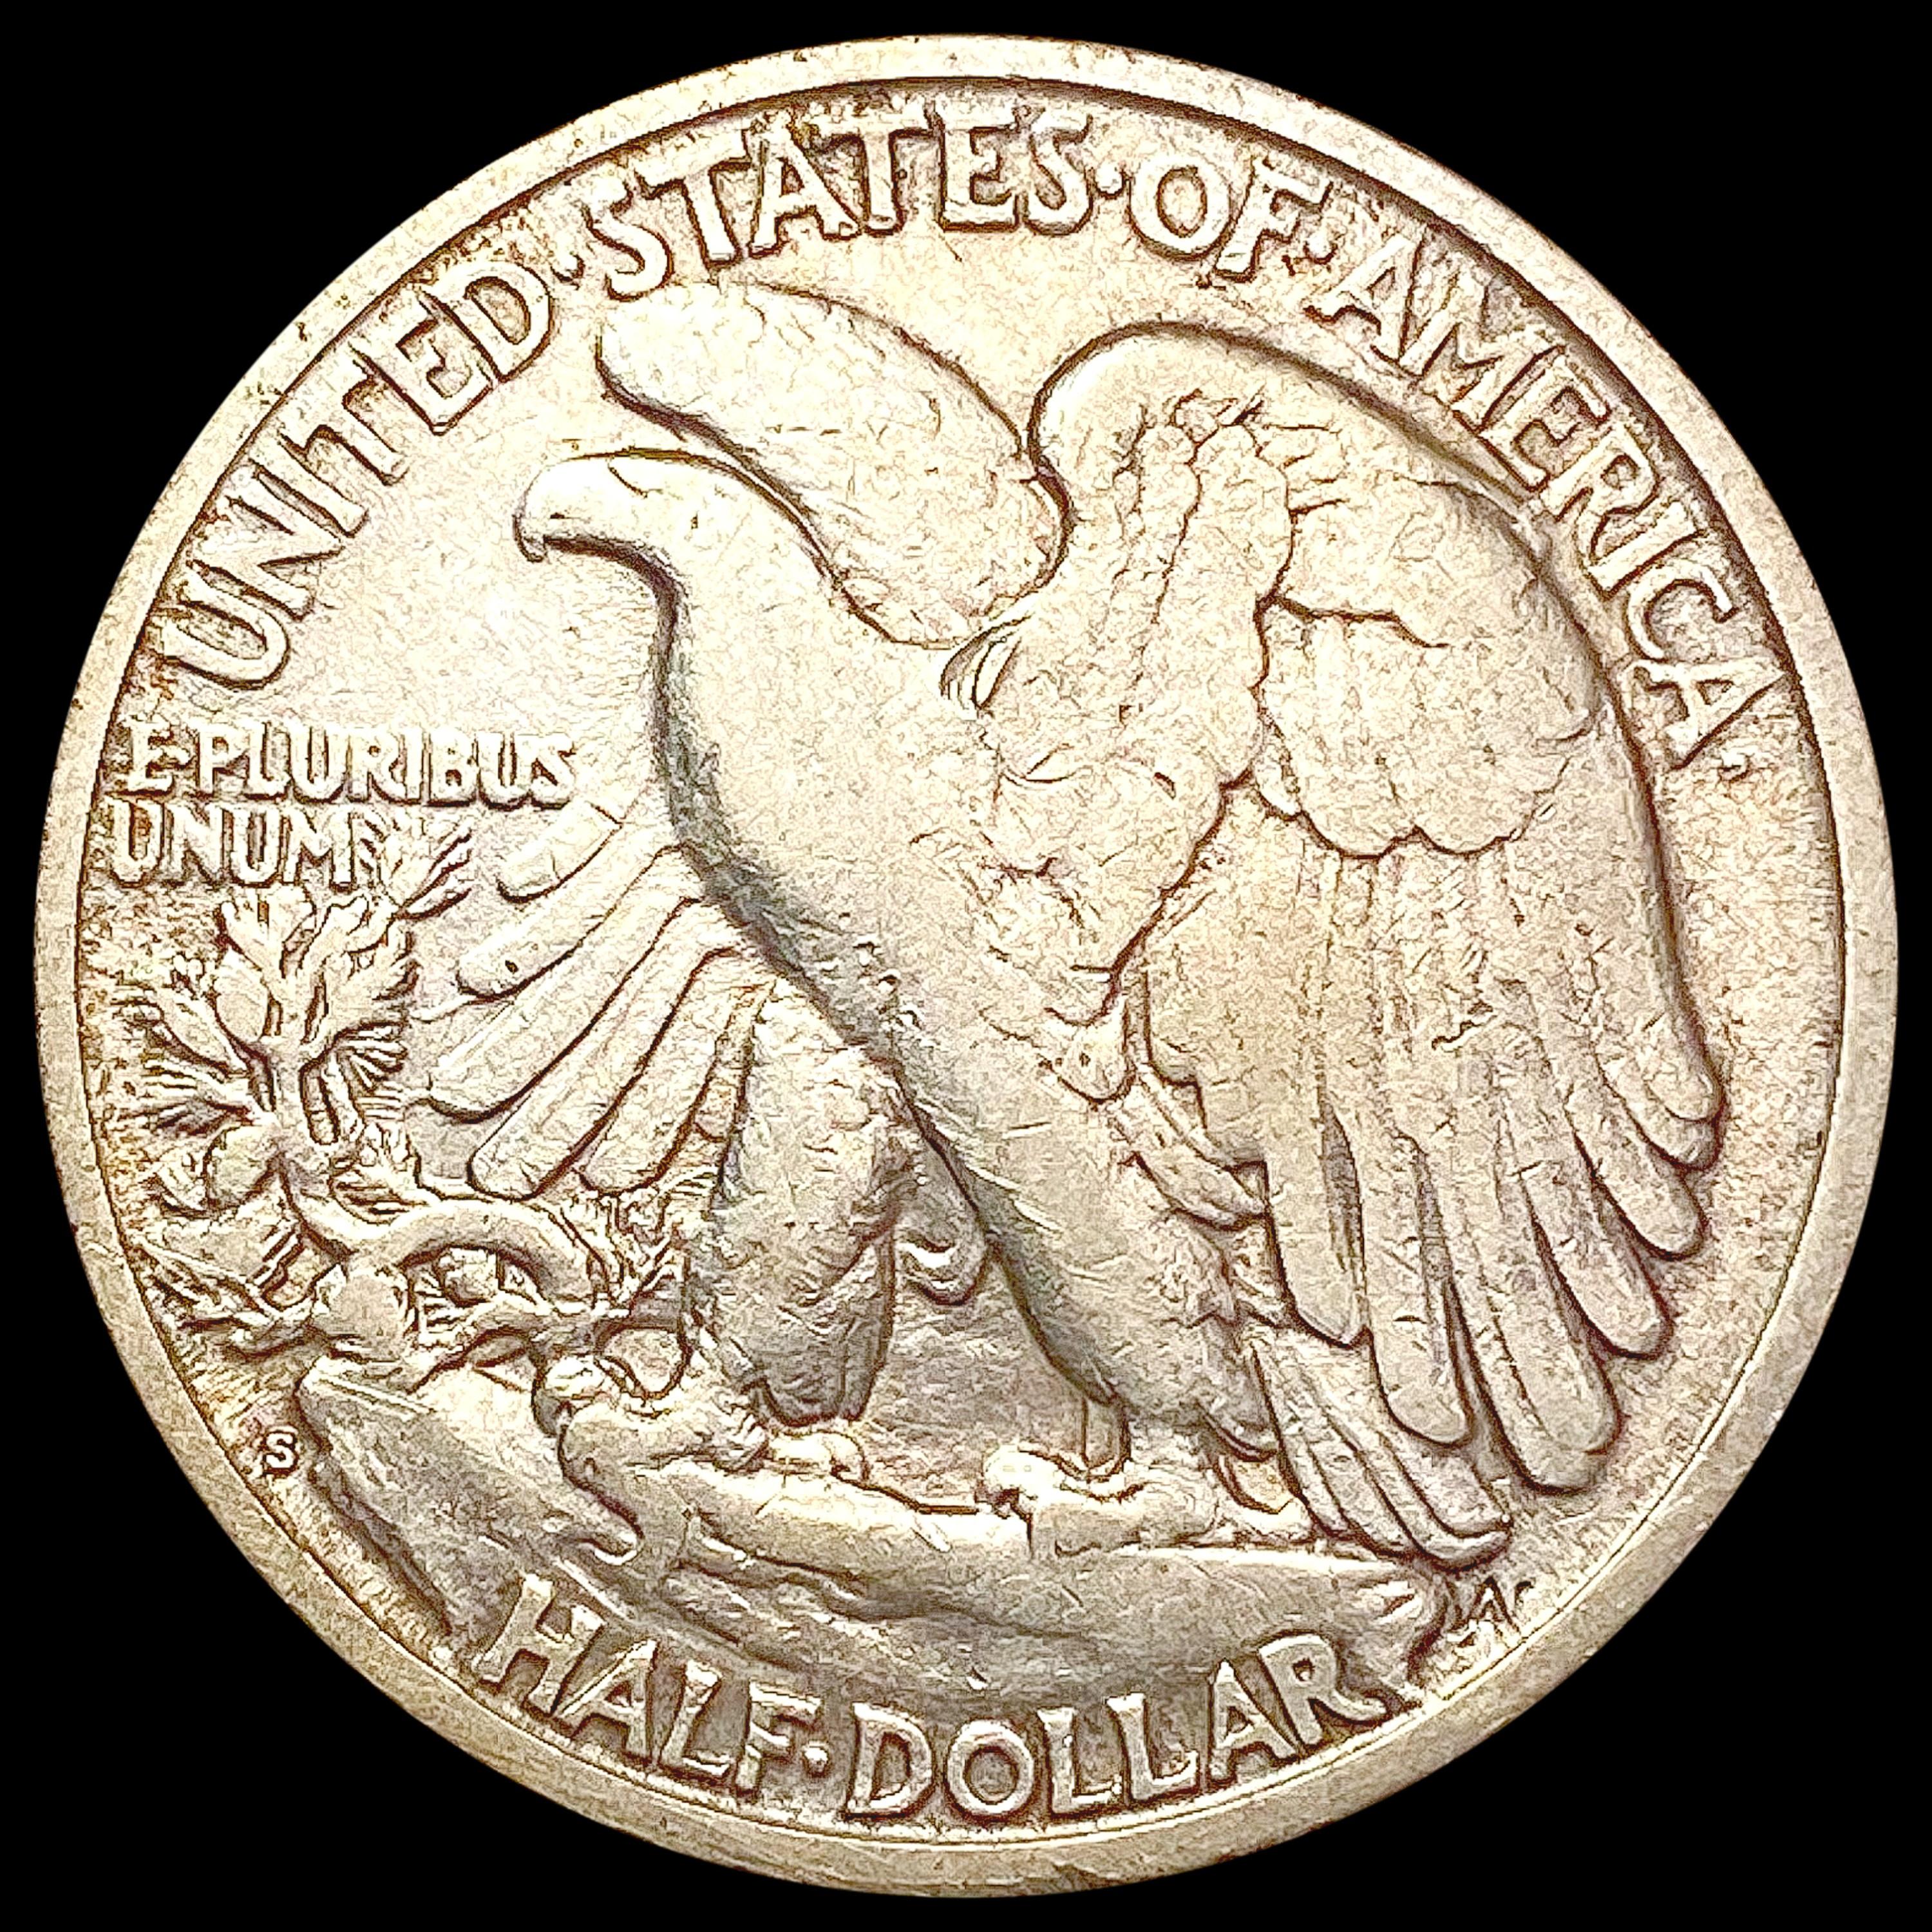 1927-S Walking Liberty Half Dollar LIGHTLY CIRCULA